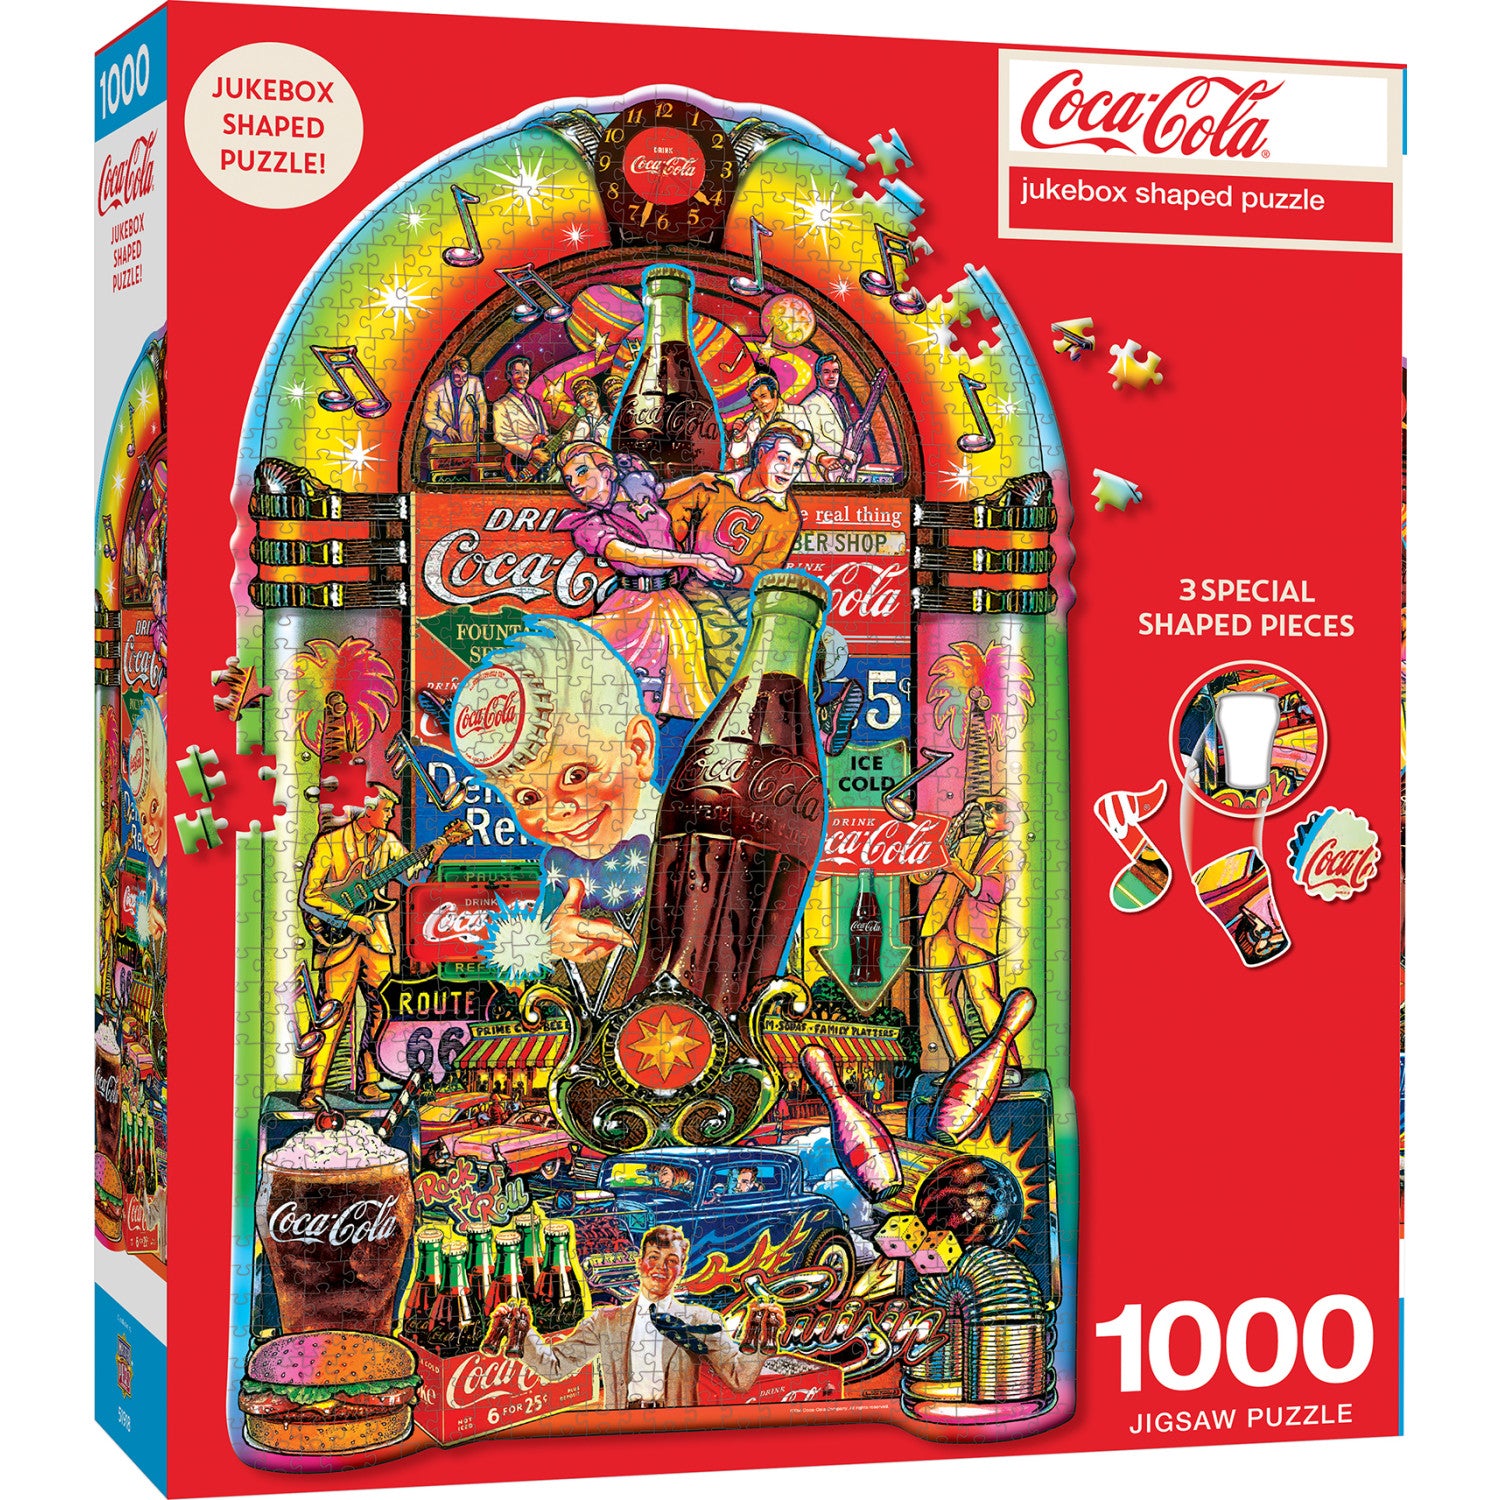 Coca-Cola Jukebox 1000 Piece Shaped Jigsaw Puzzle